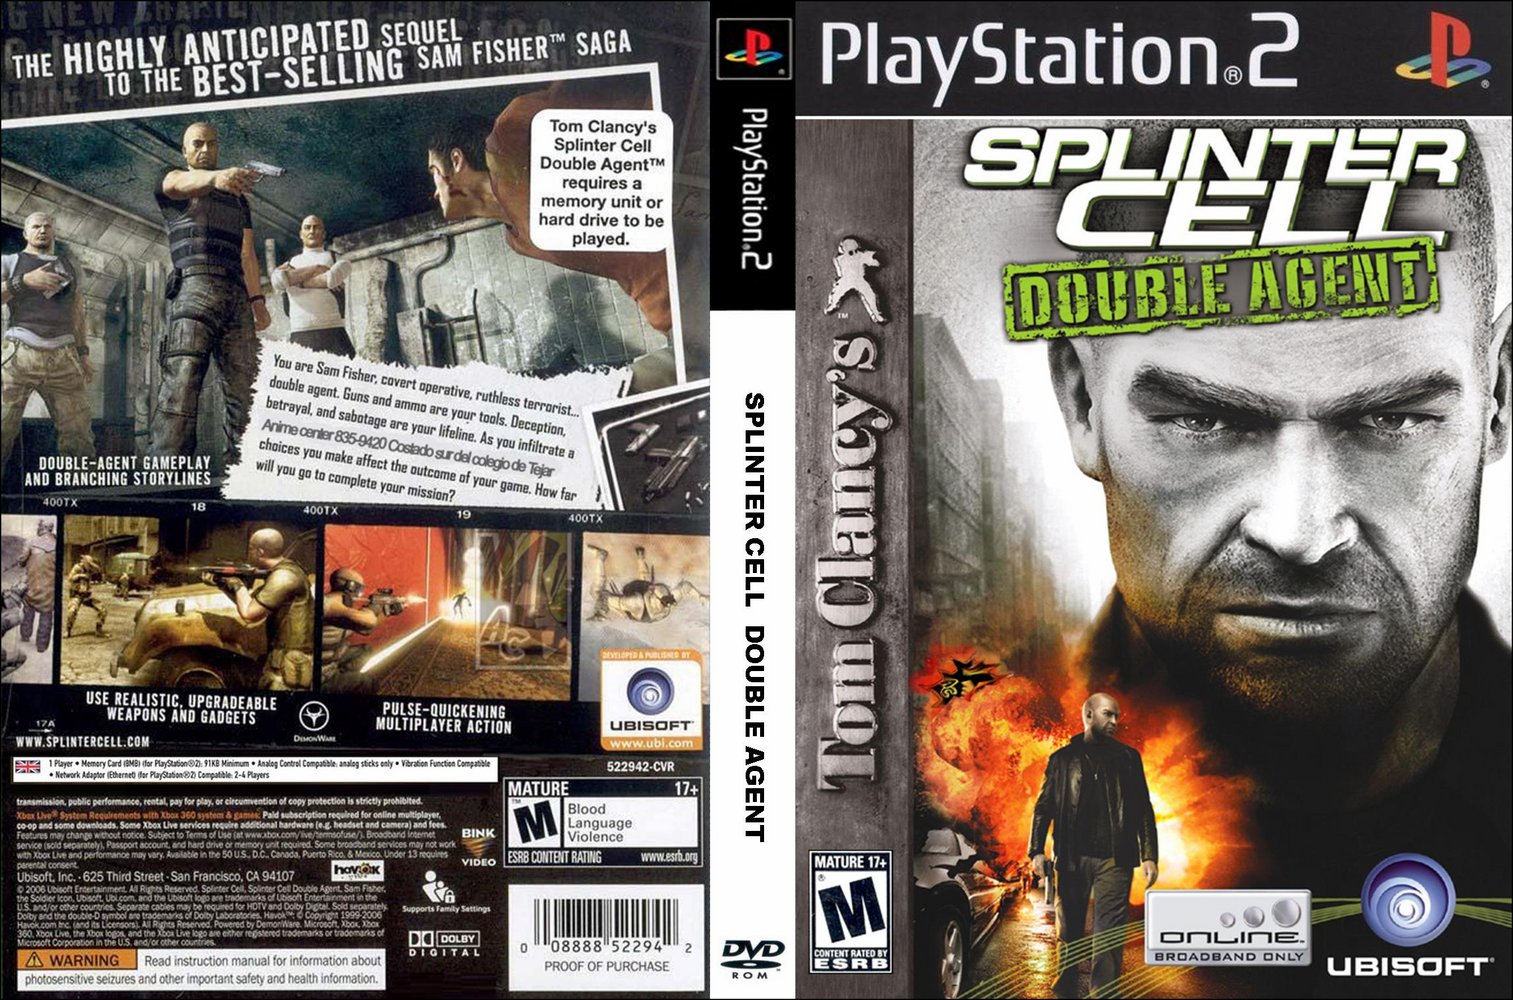 Tom Clancys Splinter Cell for PlayStation 2 - GameFAQs